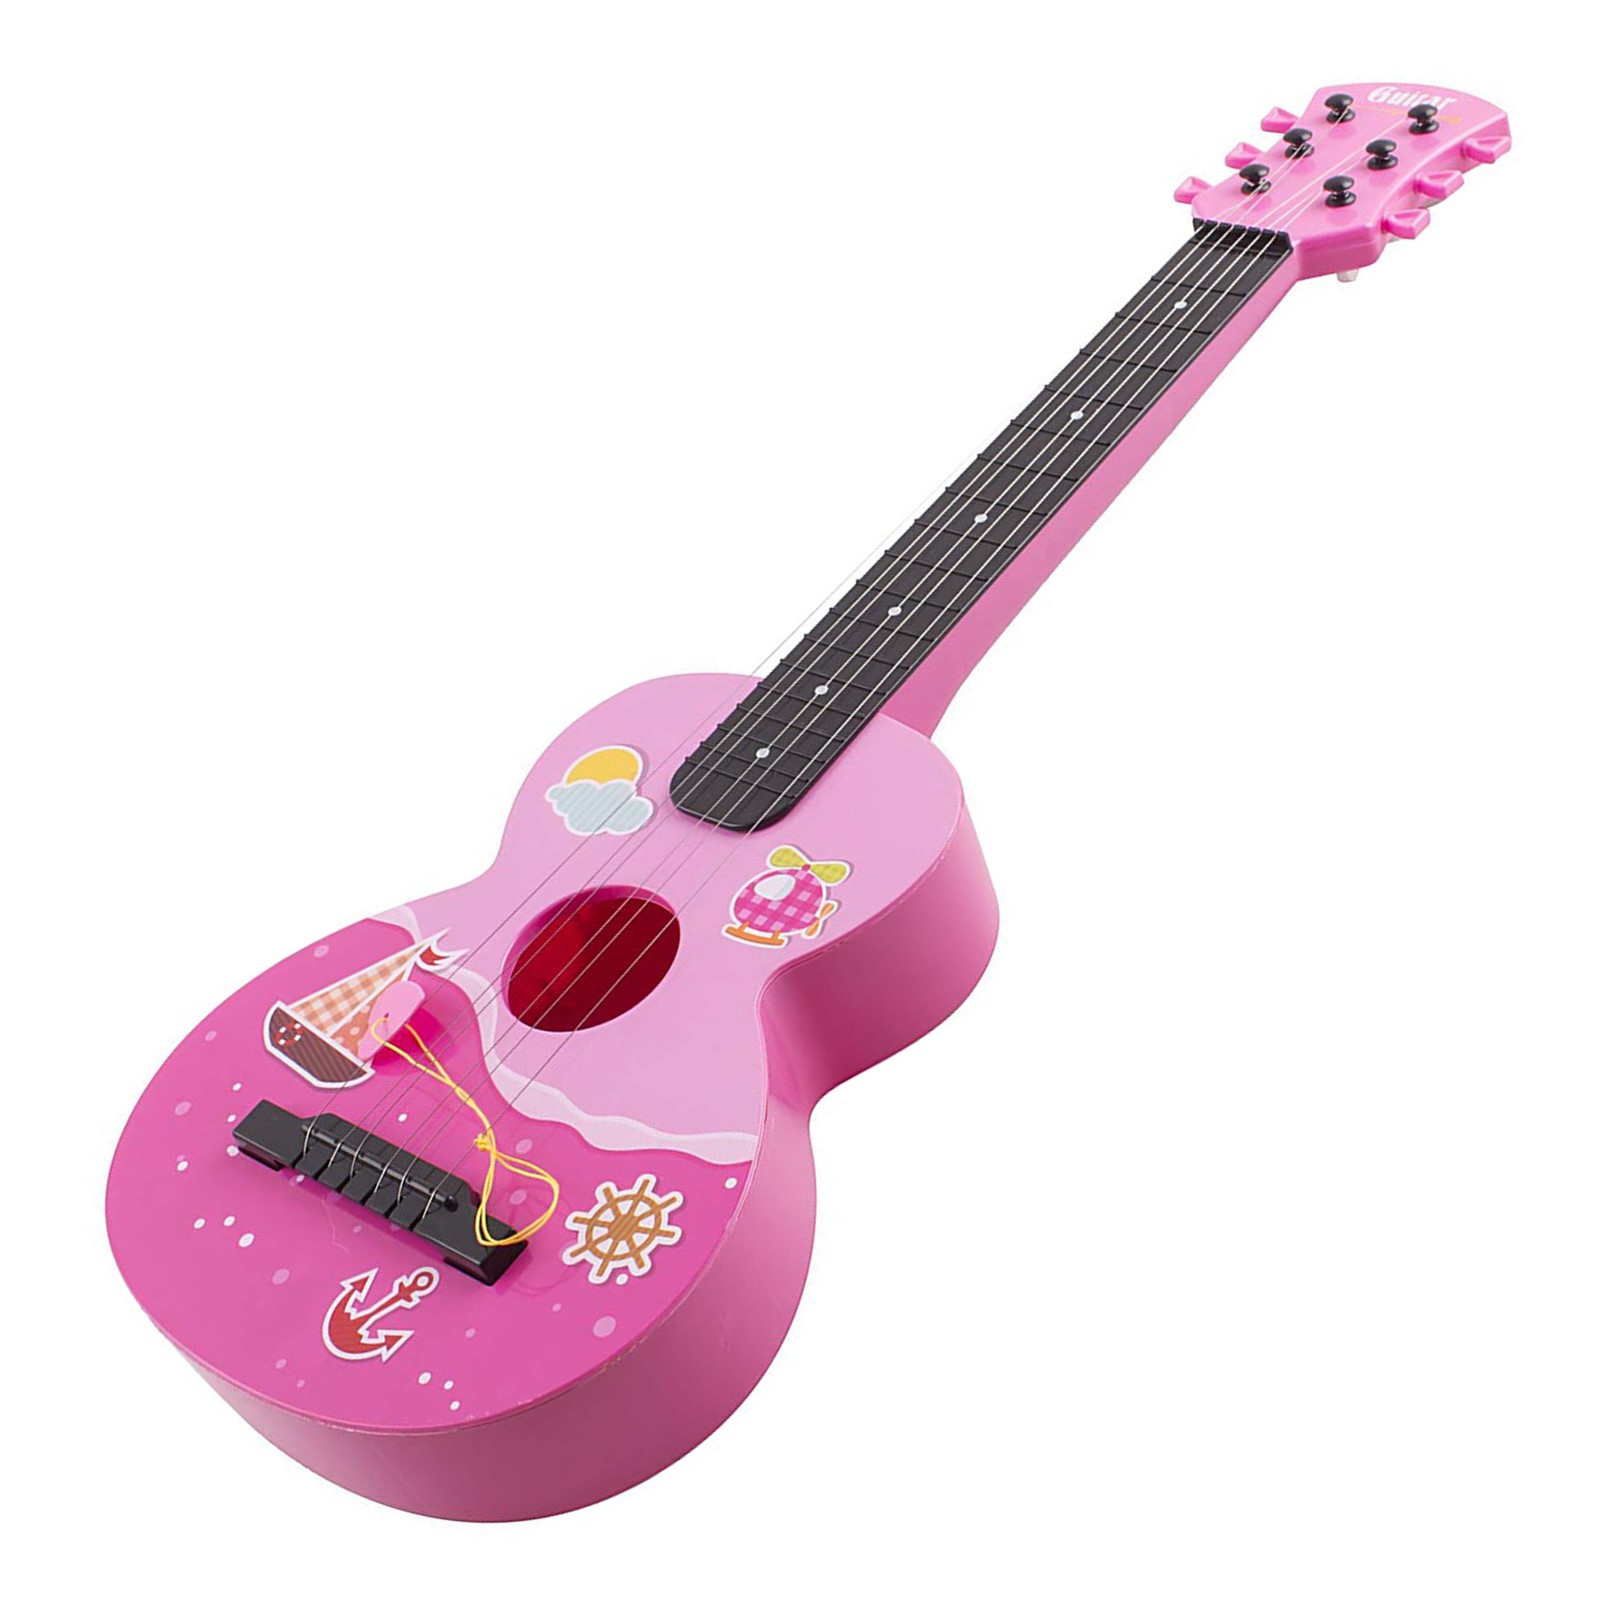 Toy Guitar Rock Star 6 String Acoustic Kids 25.5" Ukulele With Guitar Pick Children's Musical Instrument Vibrant Sound Tunable Strings Educational And Perfect For Learning How To Play Pink Color